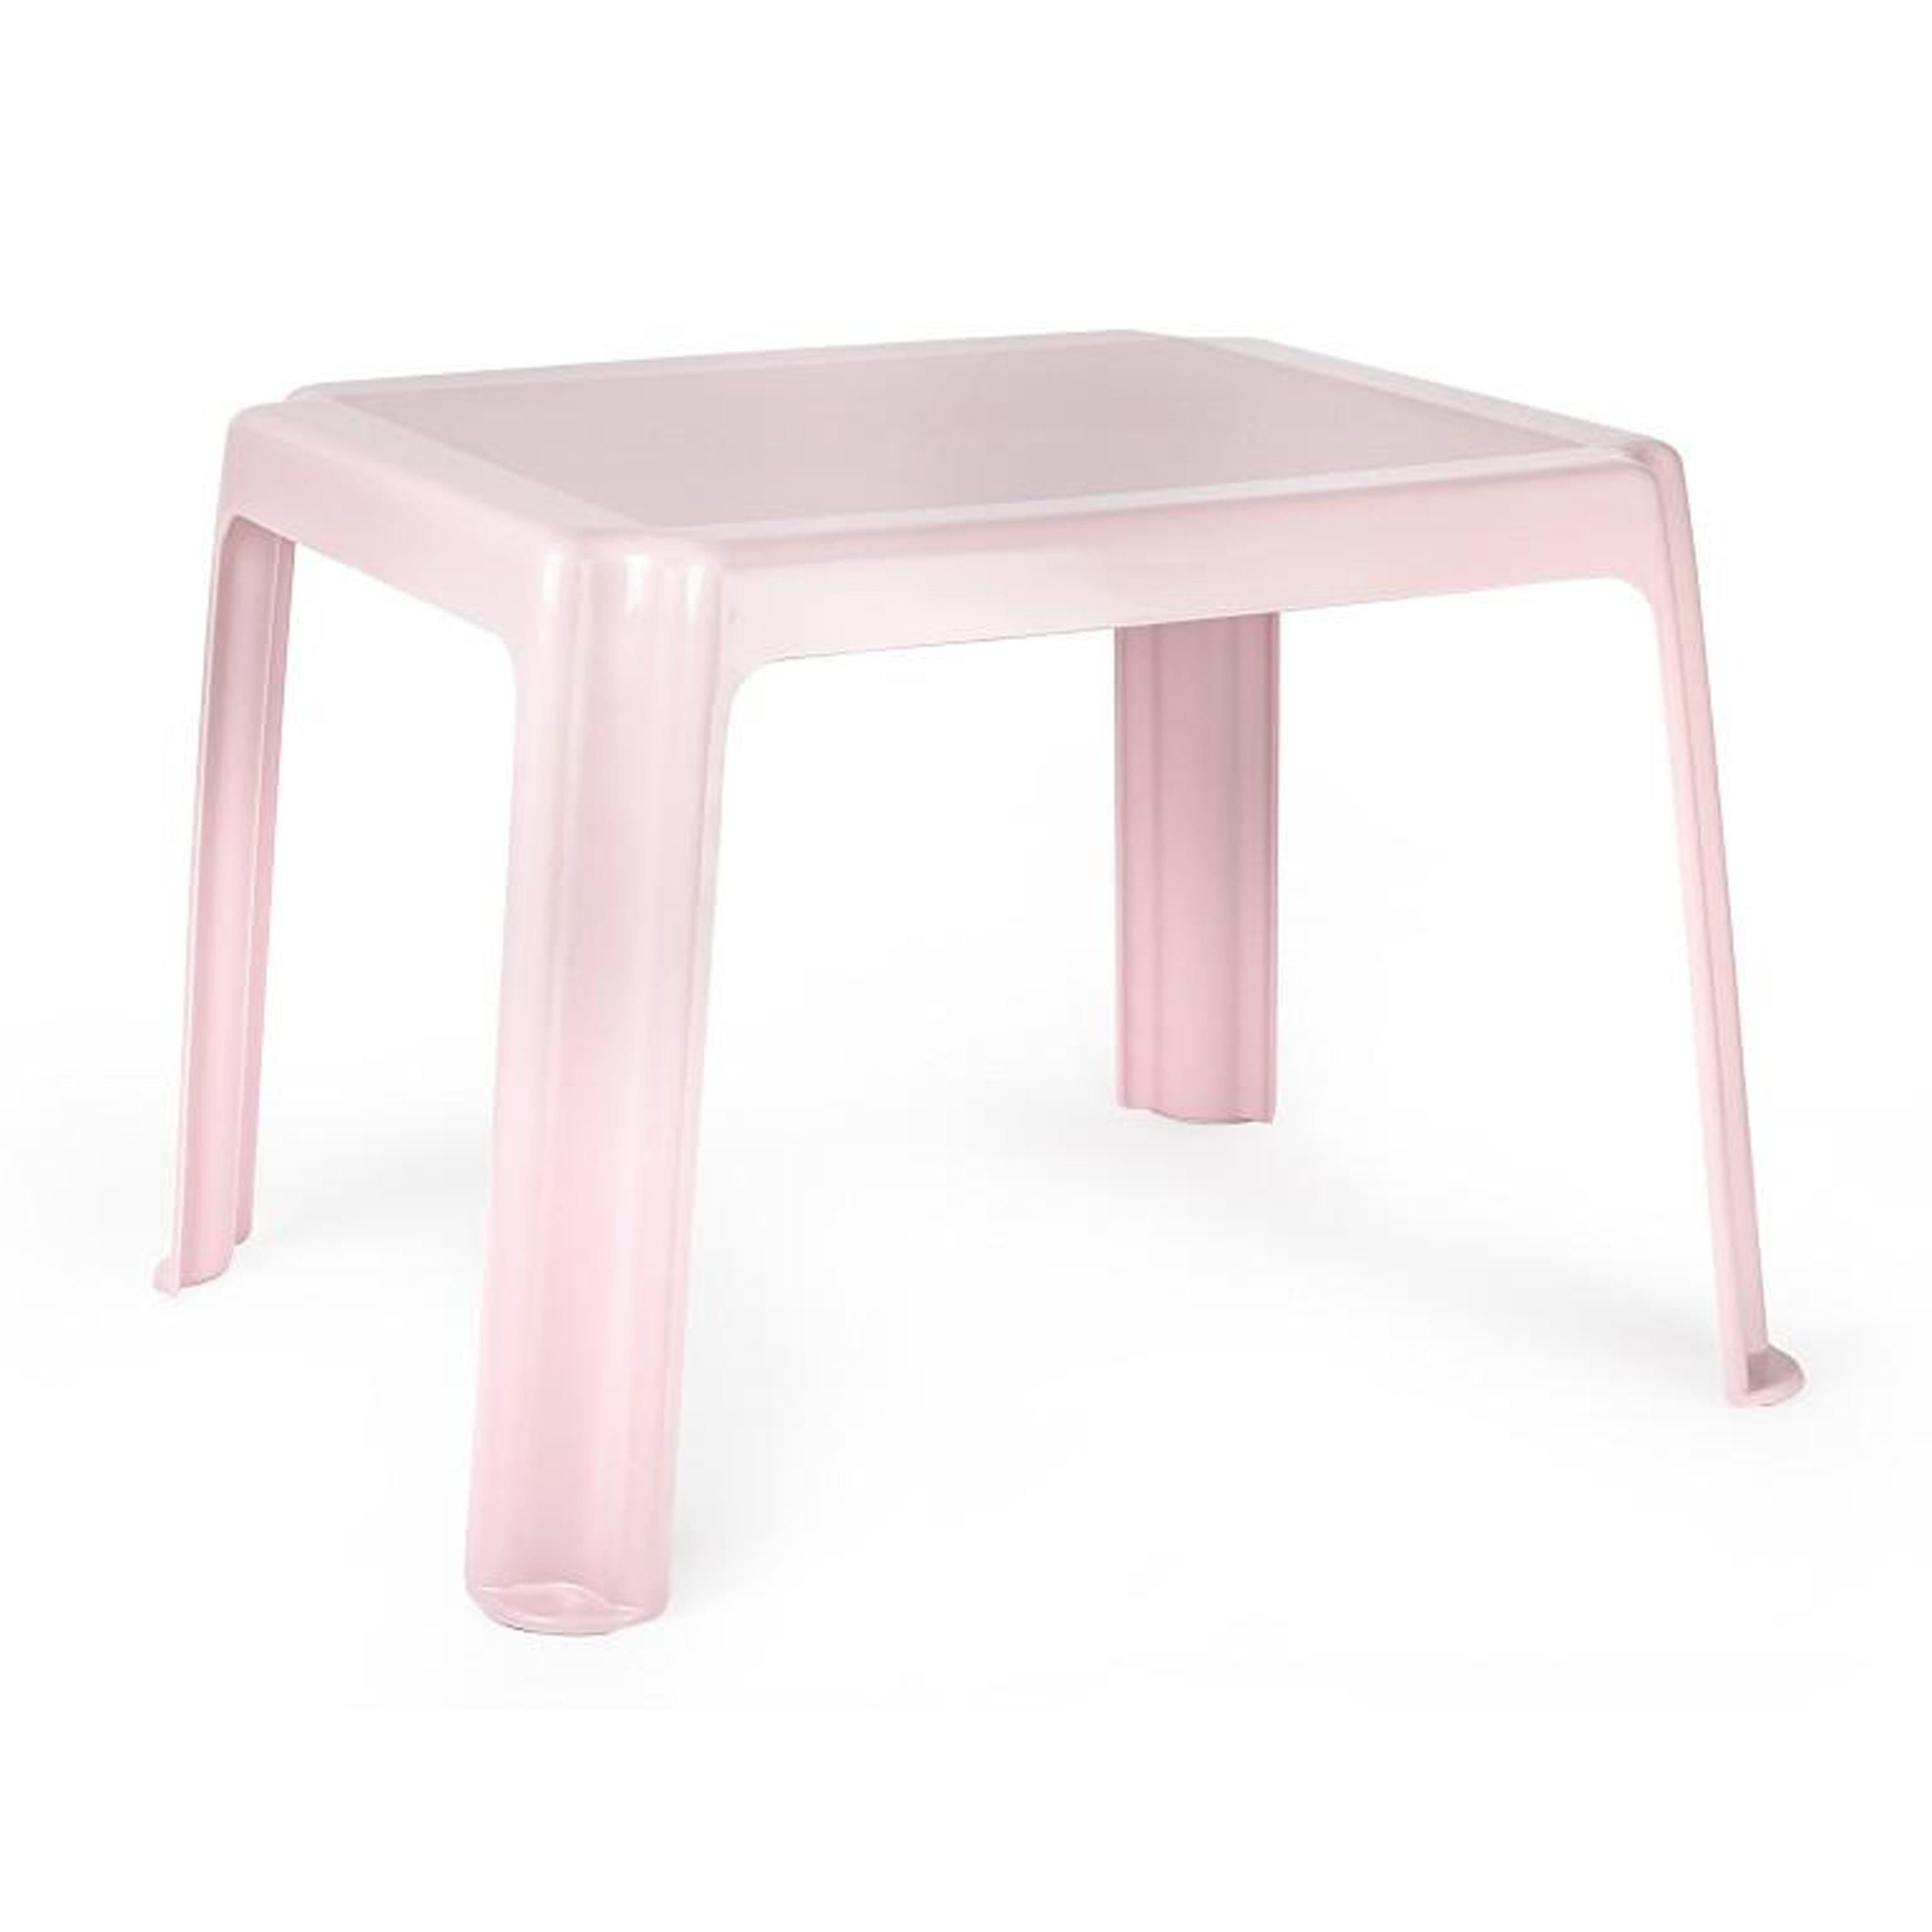 Forte Plastics Kunststof kindertafel roze 55 x 66 x 43 cm camping-tuin-kinderkamer